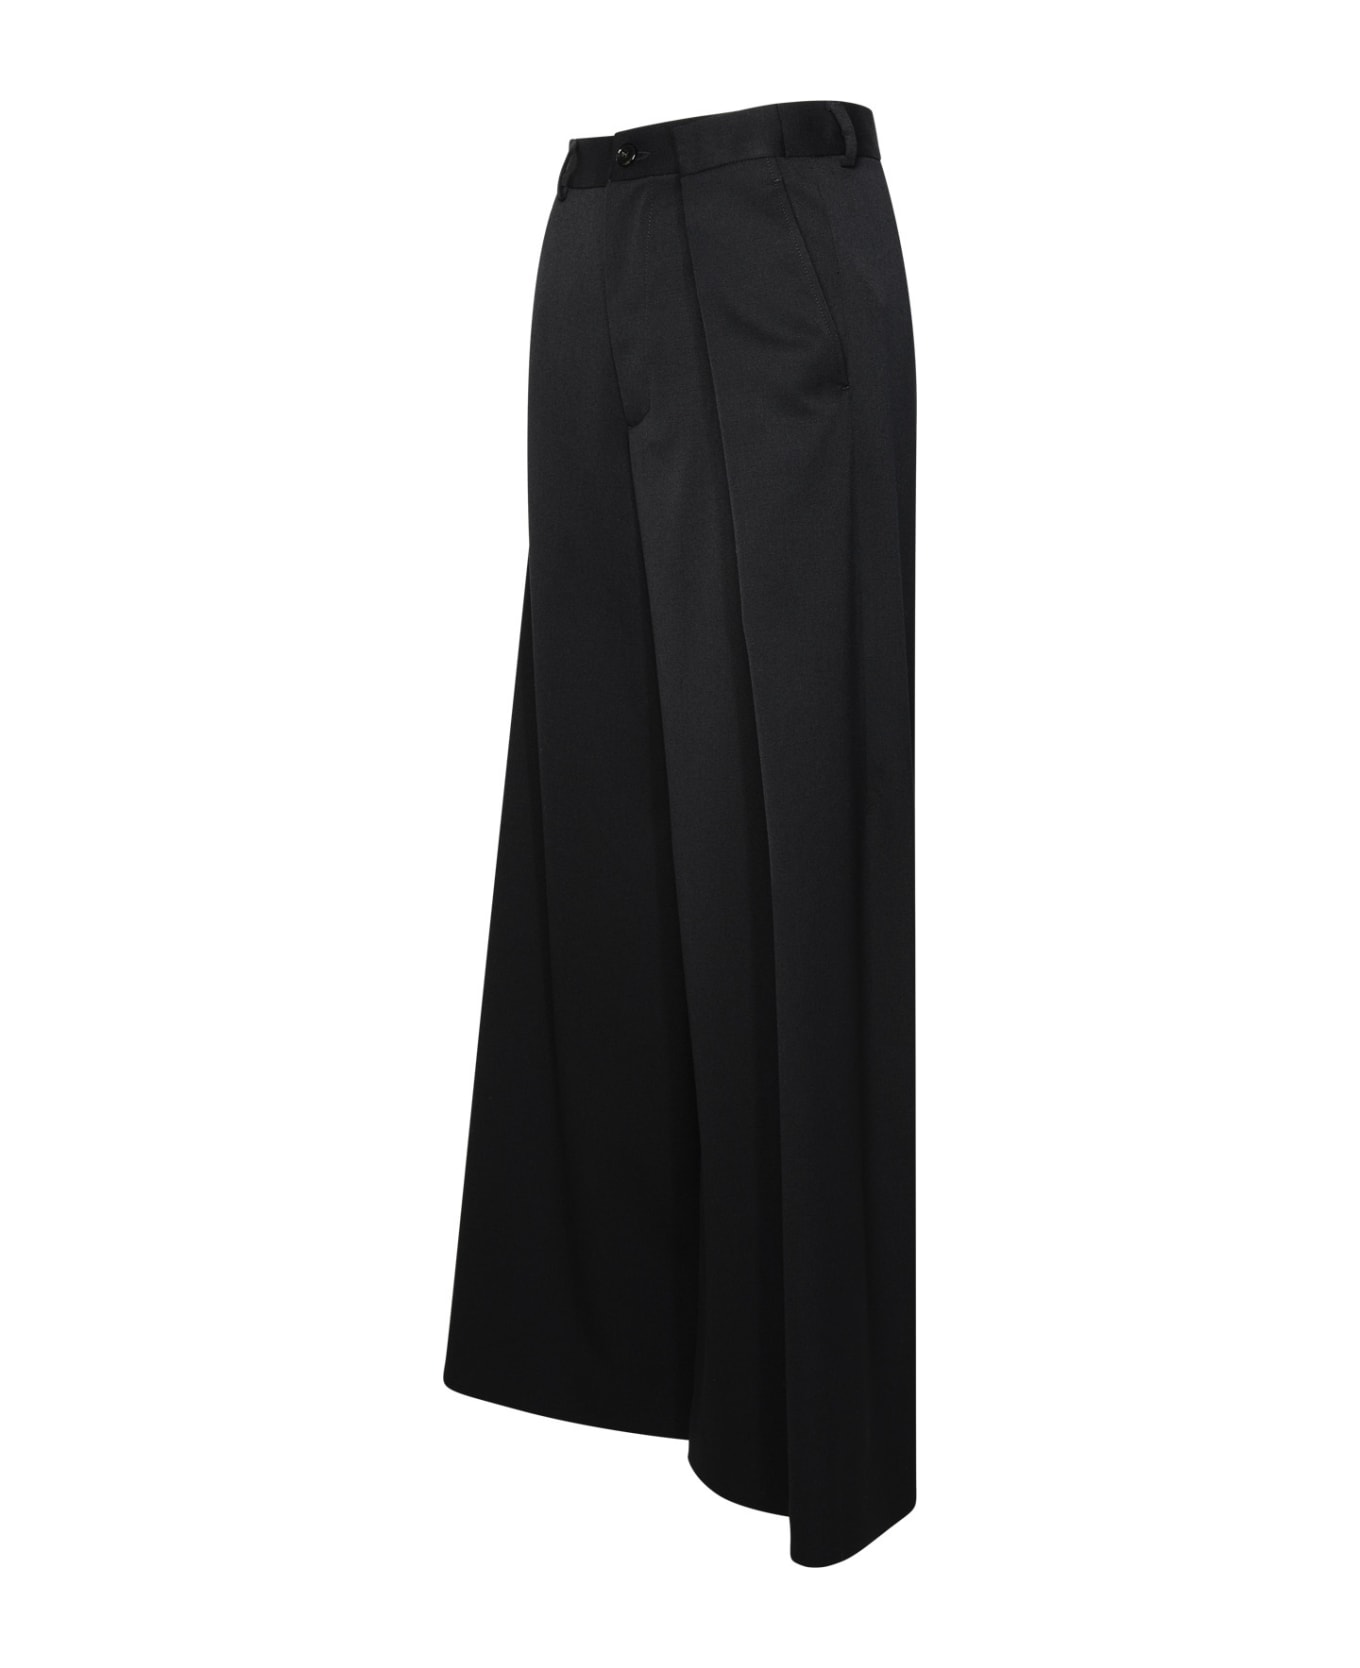 MM6 Maison Margiela Black Virgin Wool Blend Tailored Trousers - Black